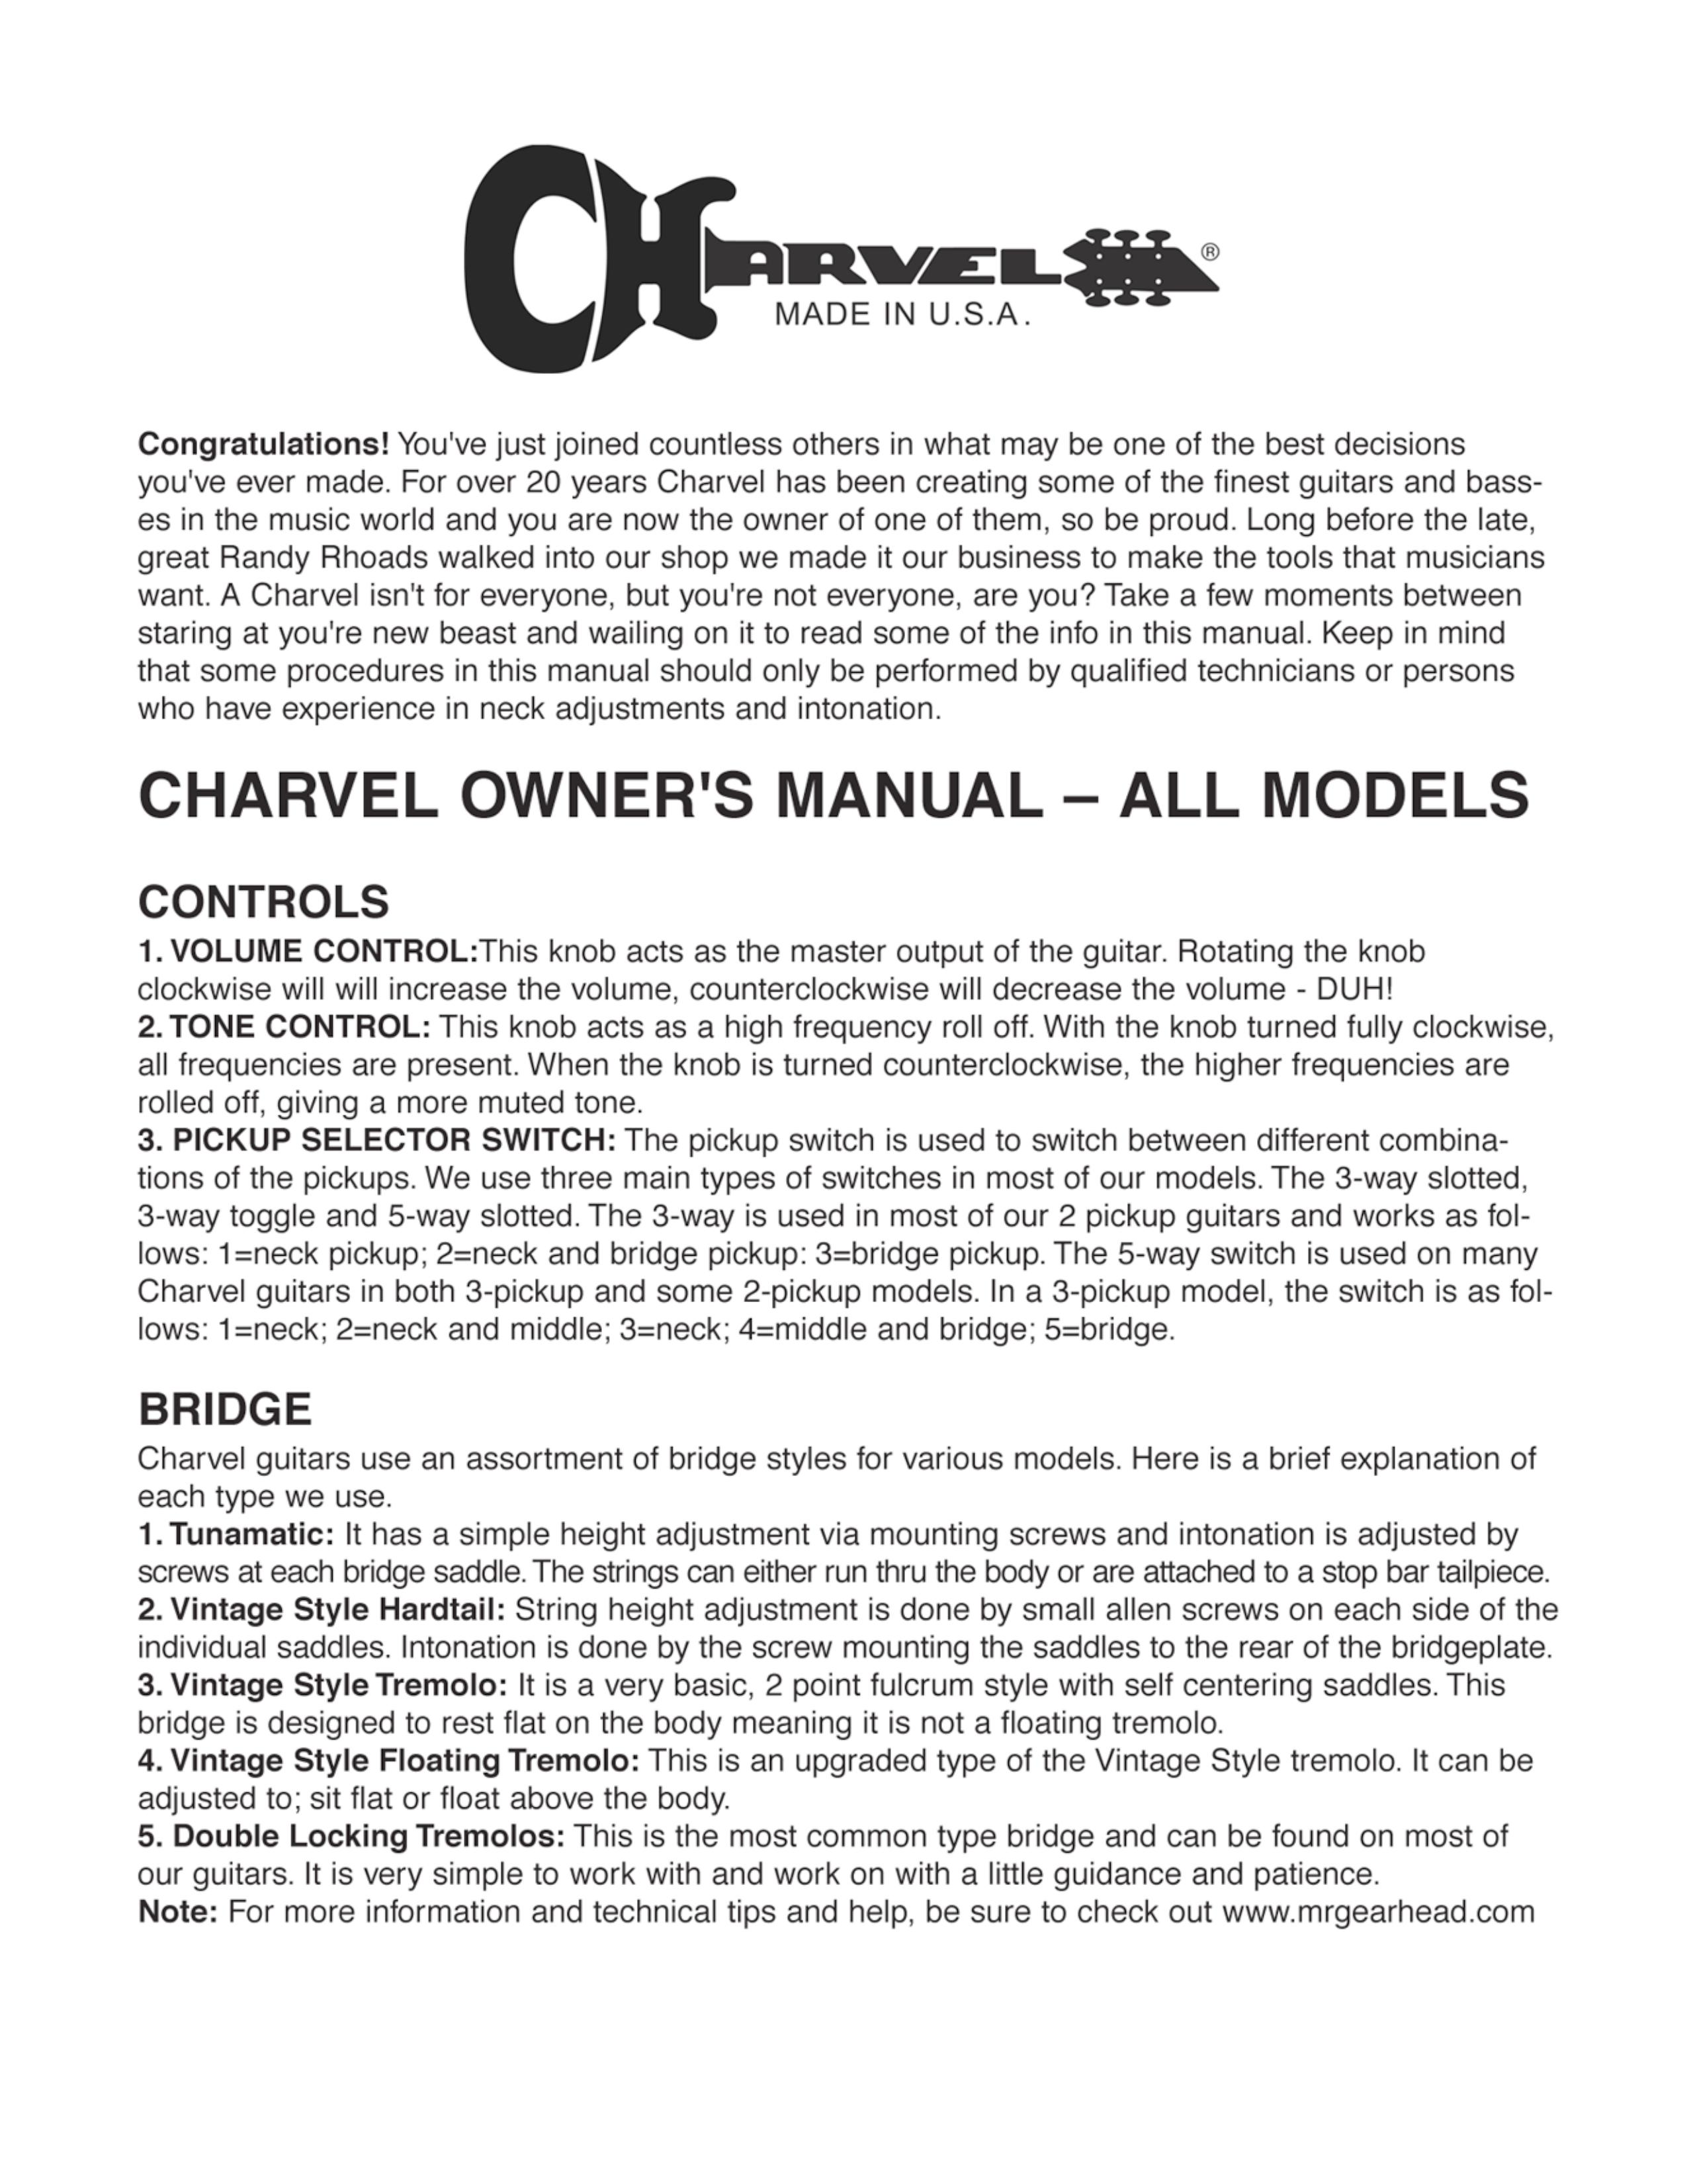 Charvel Star Bass Guitar User Manual